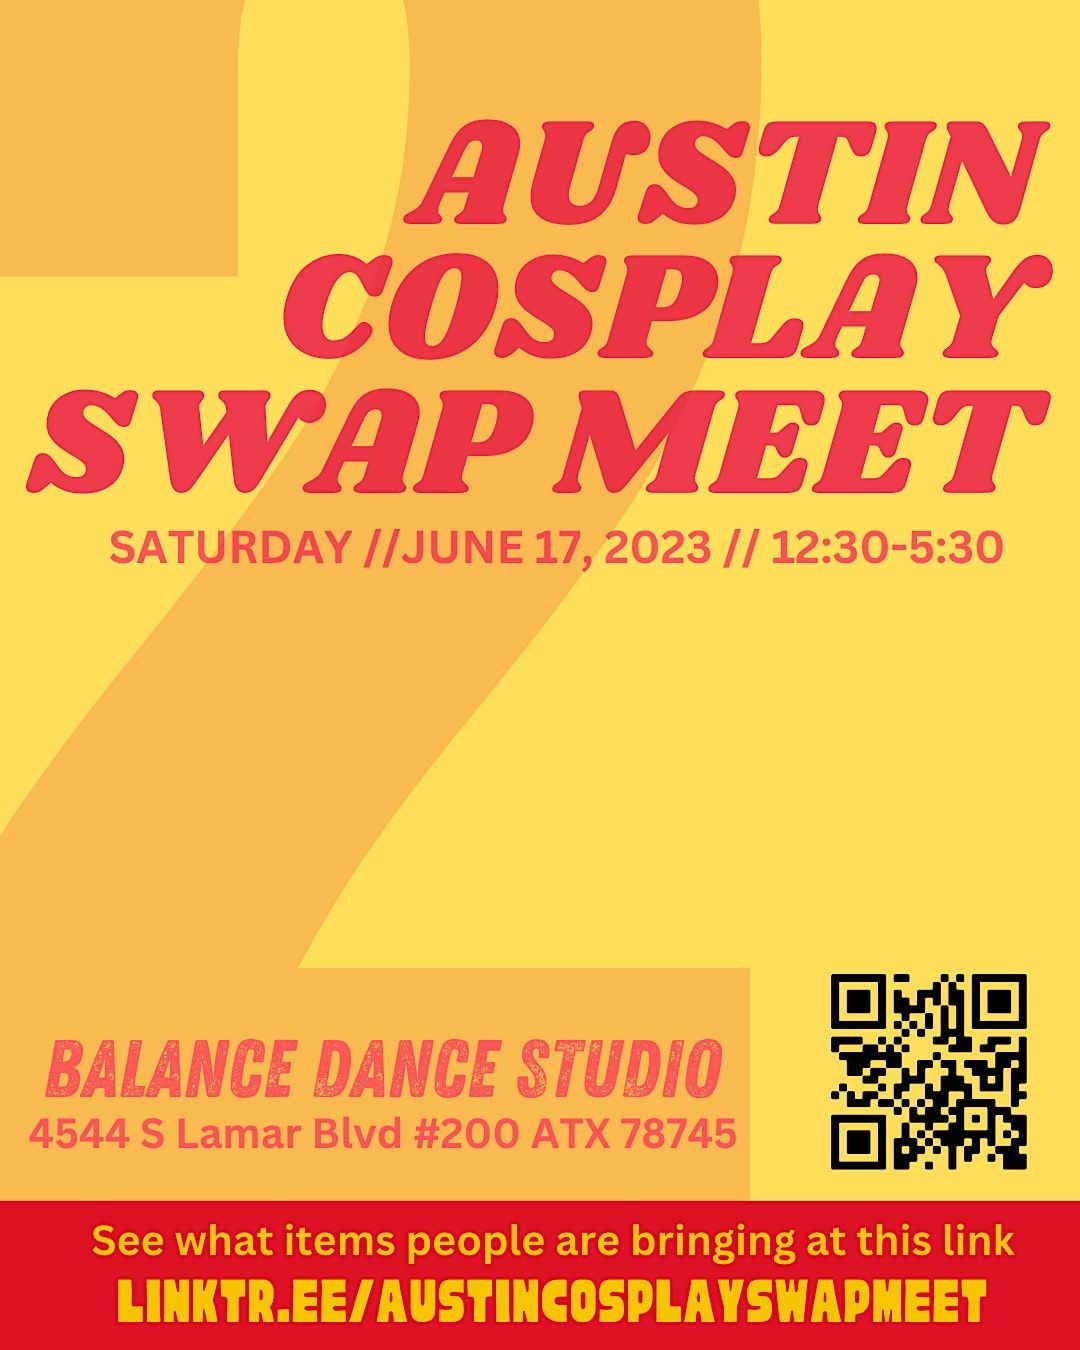 Austin Cosplay Swap Meet